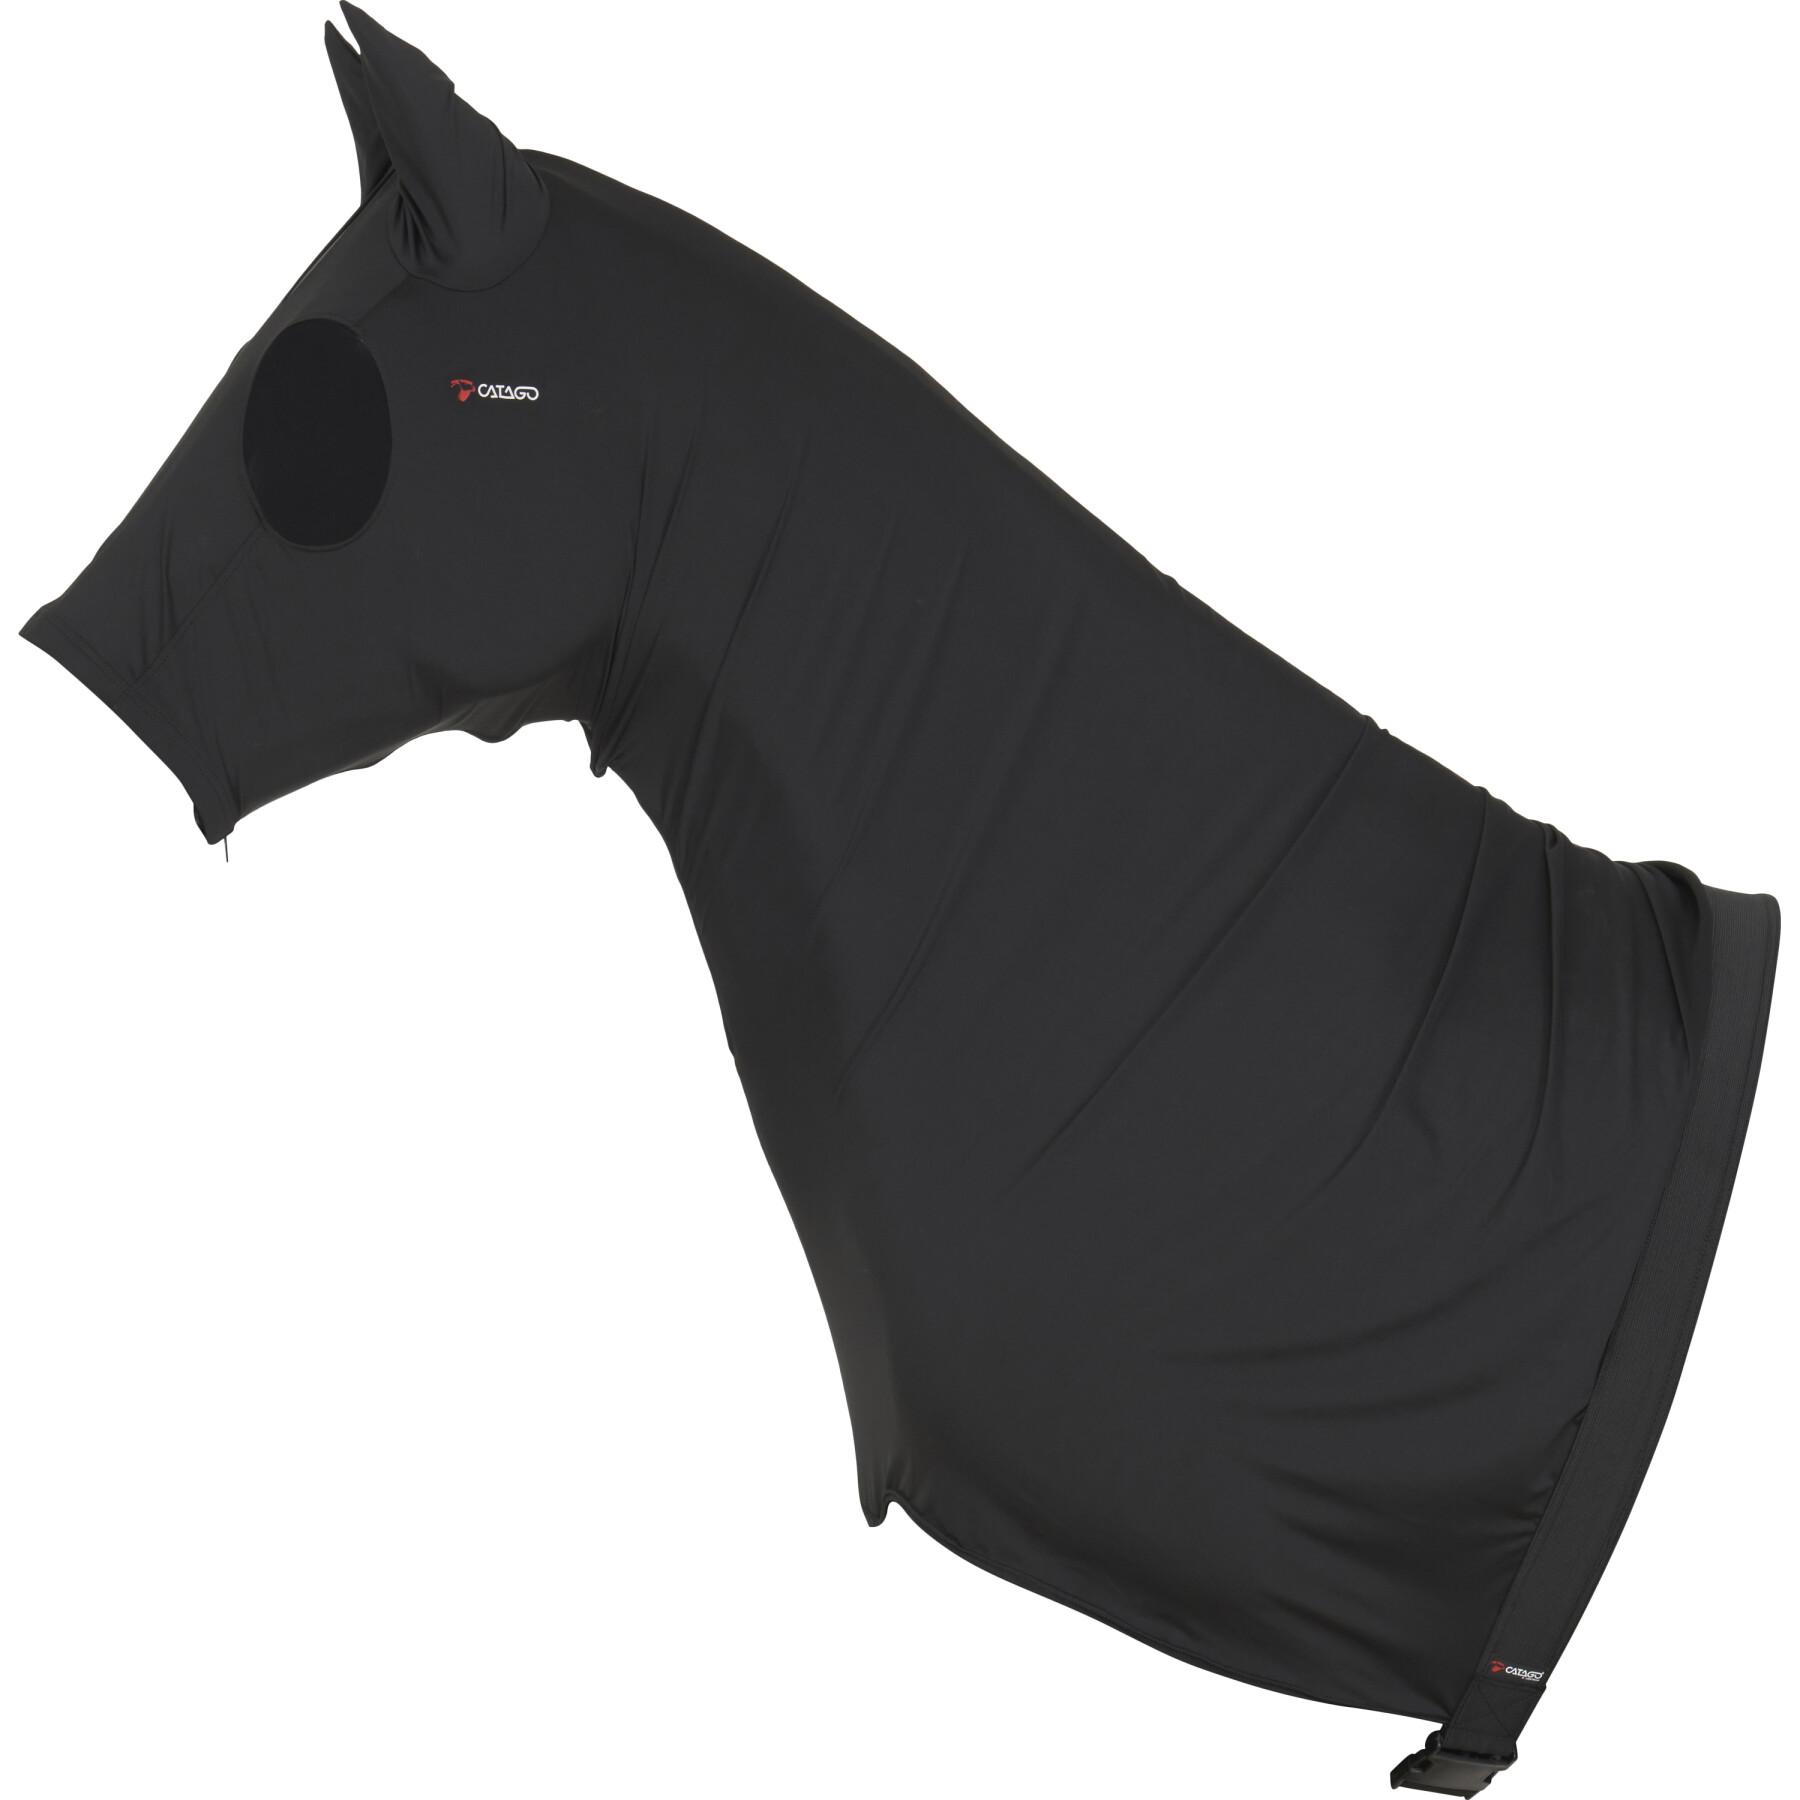 Stretch vliegenmasker voor paarden Catago FIR-Tech